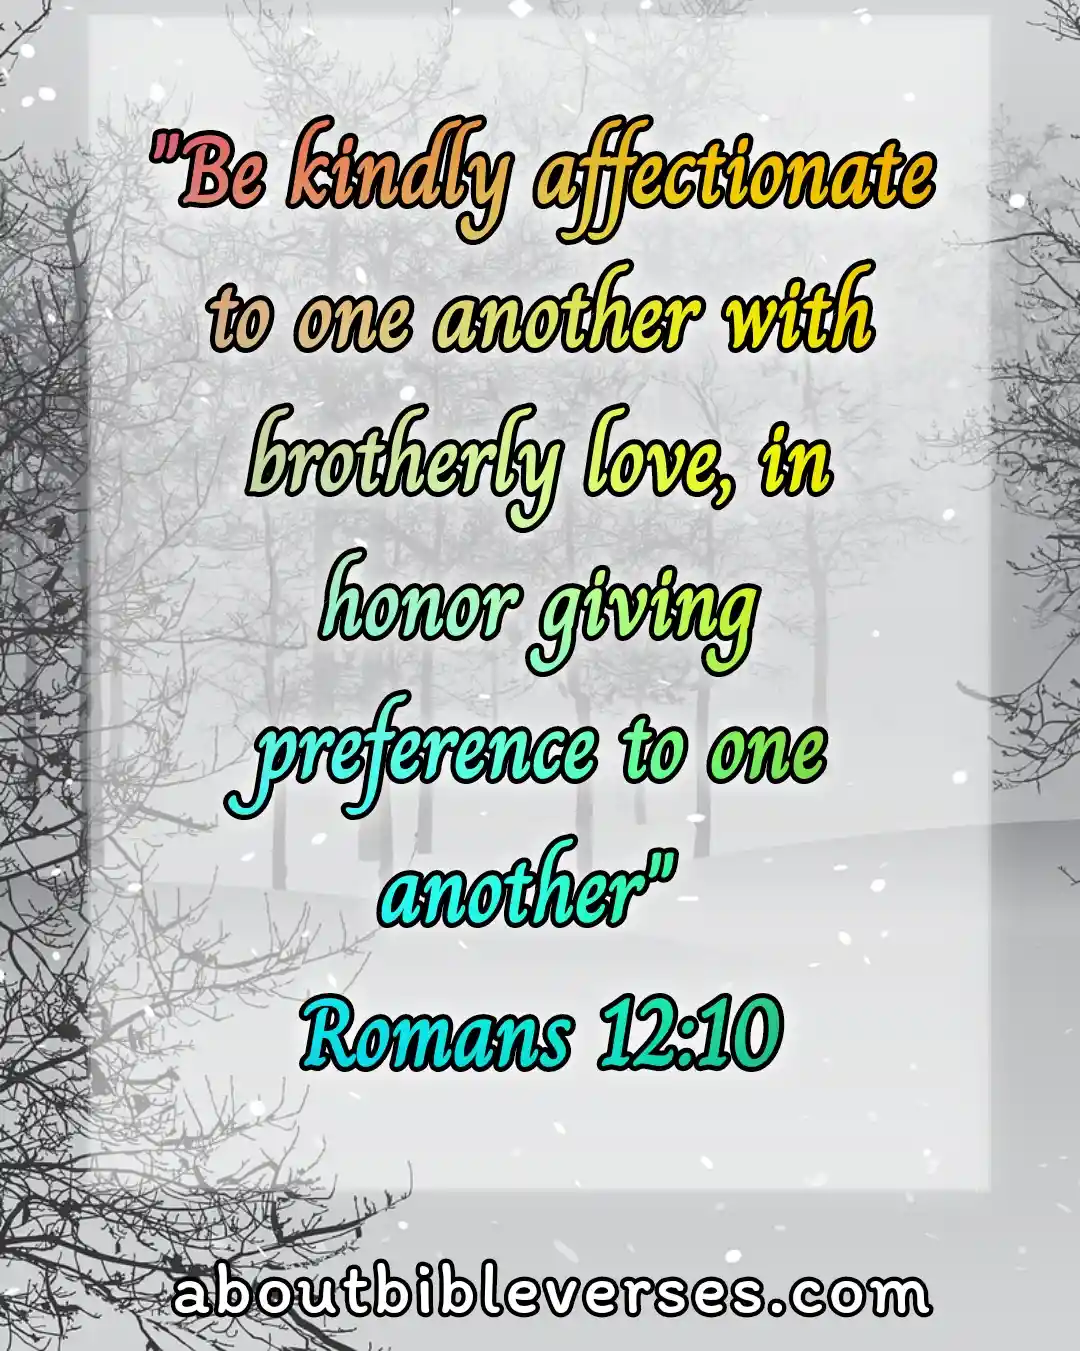 bible verses loving your neighbor (Romans 12:10)